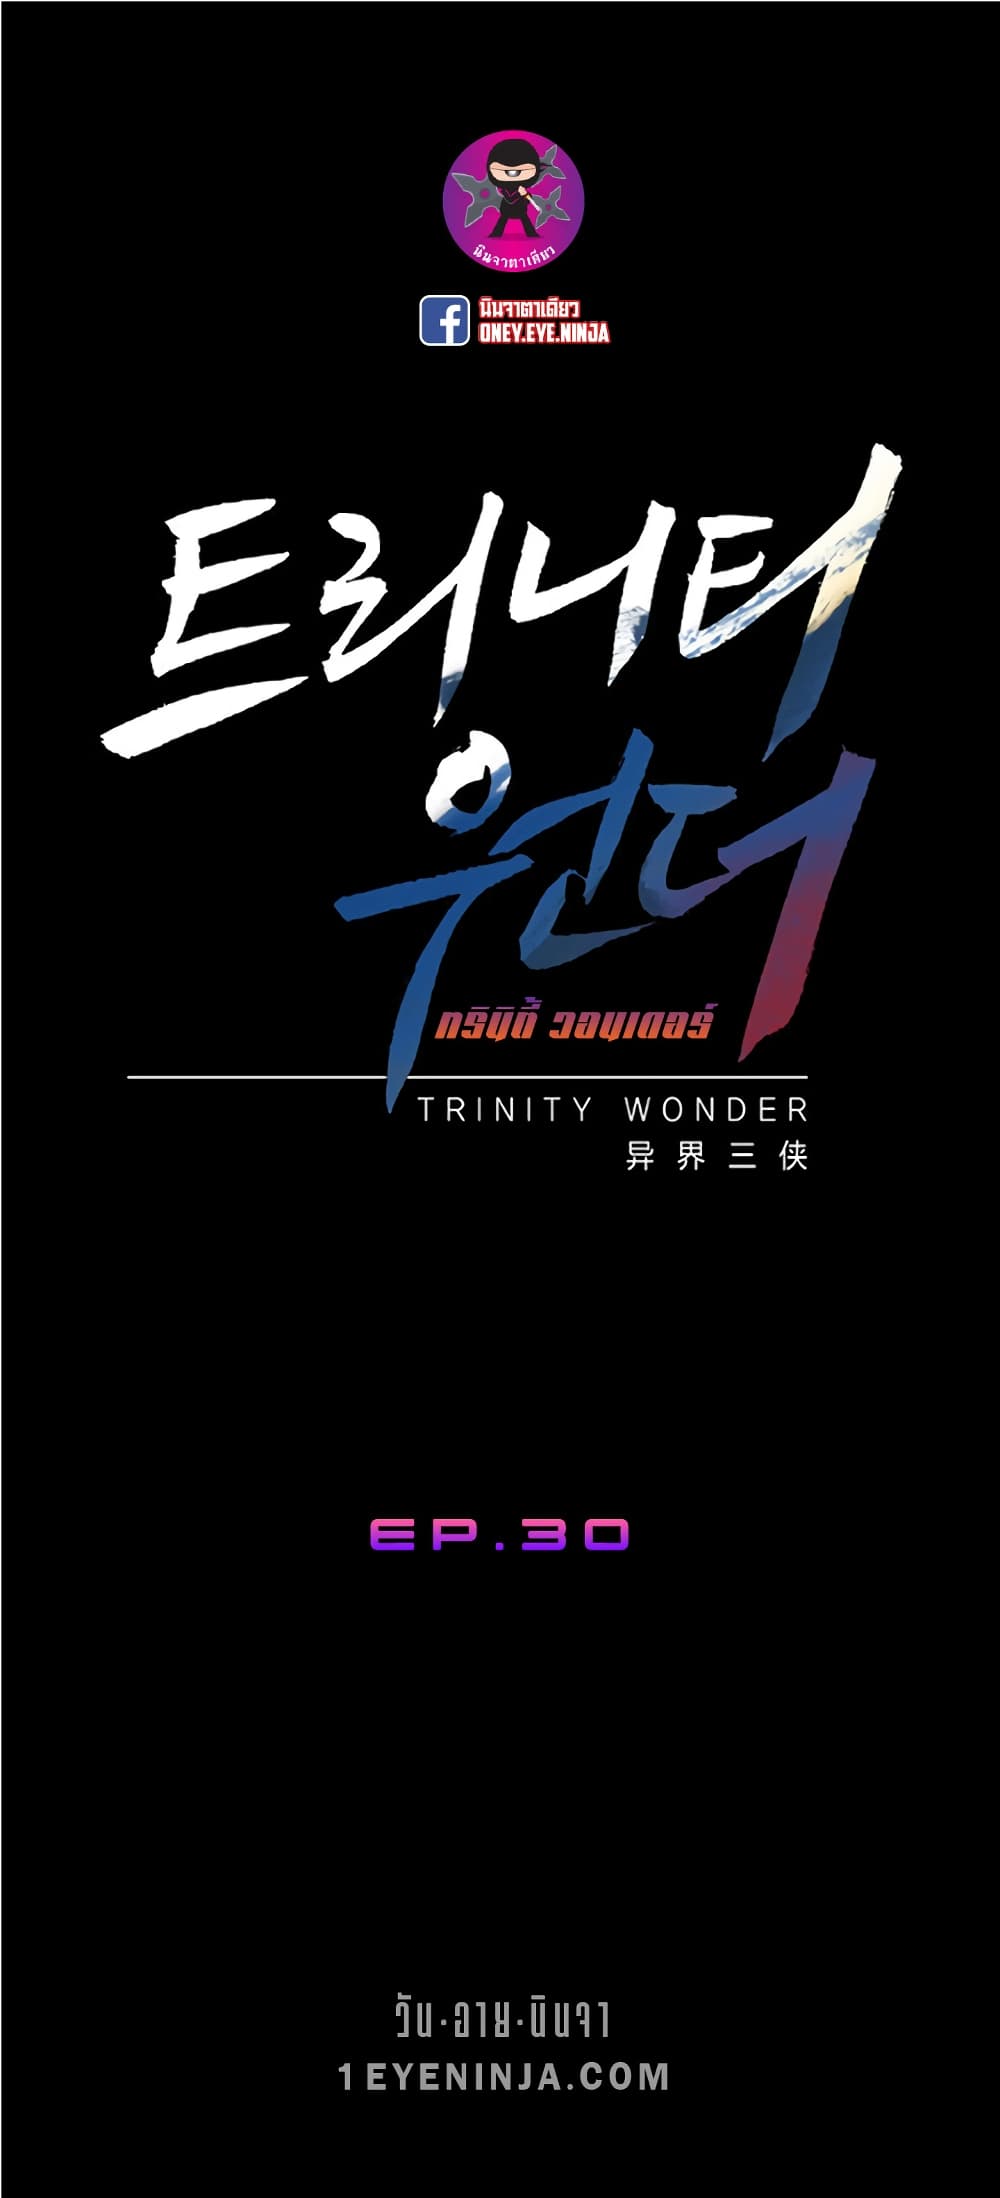 Trinity Wonder 30 (2)